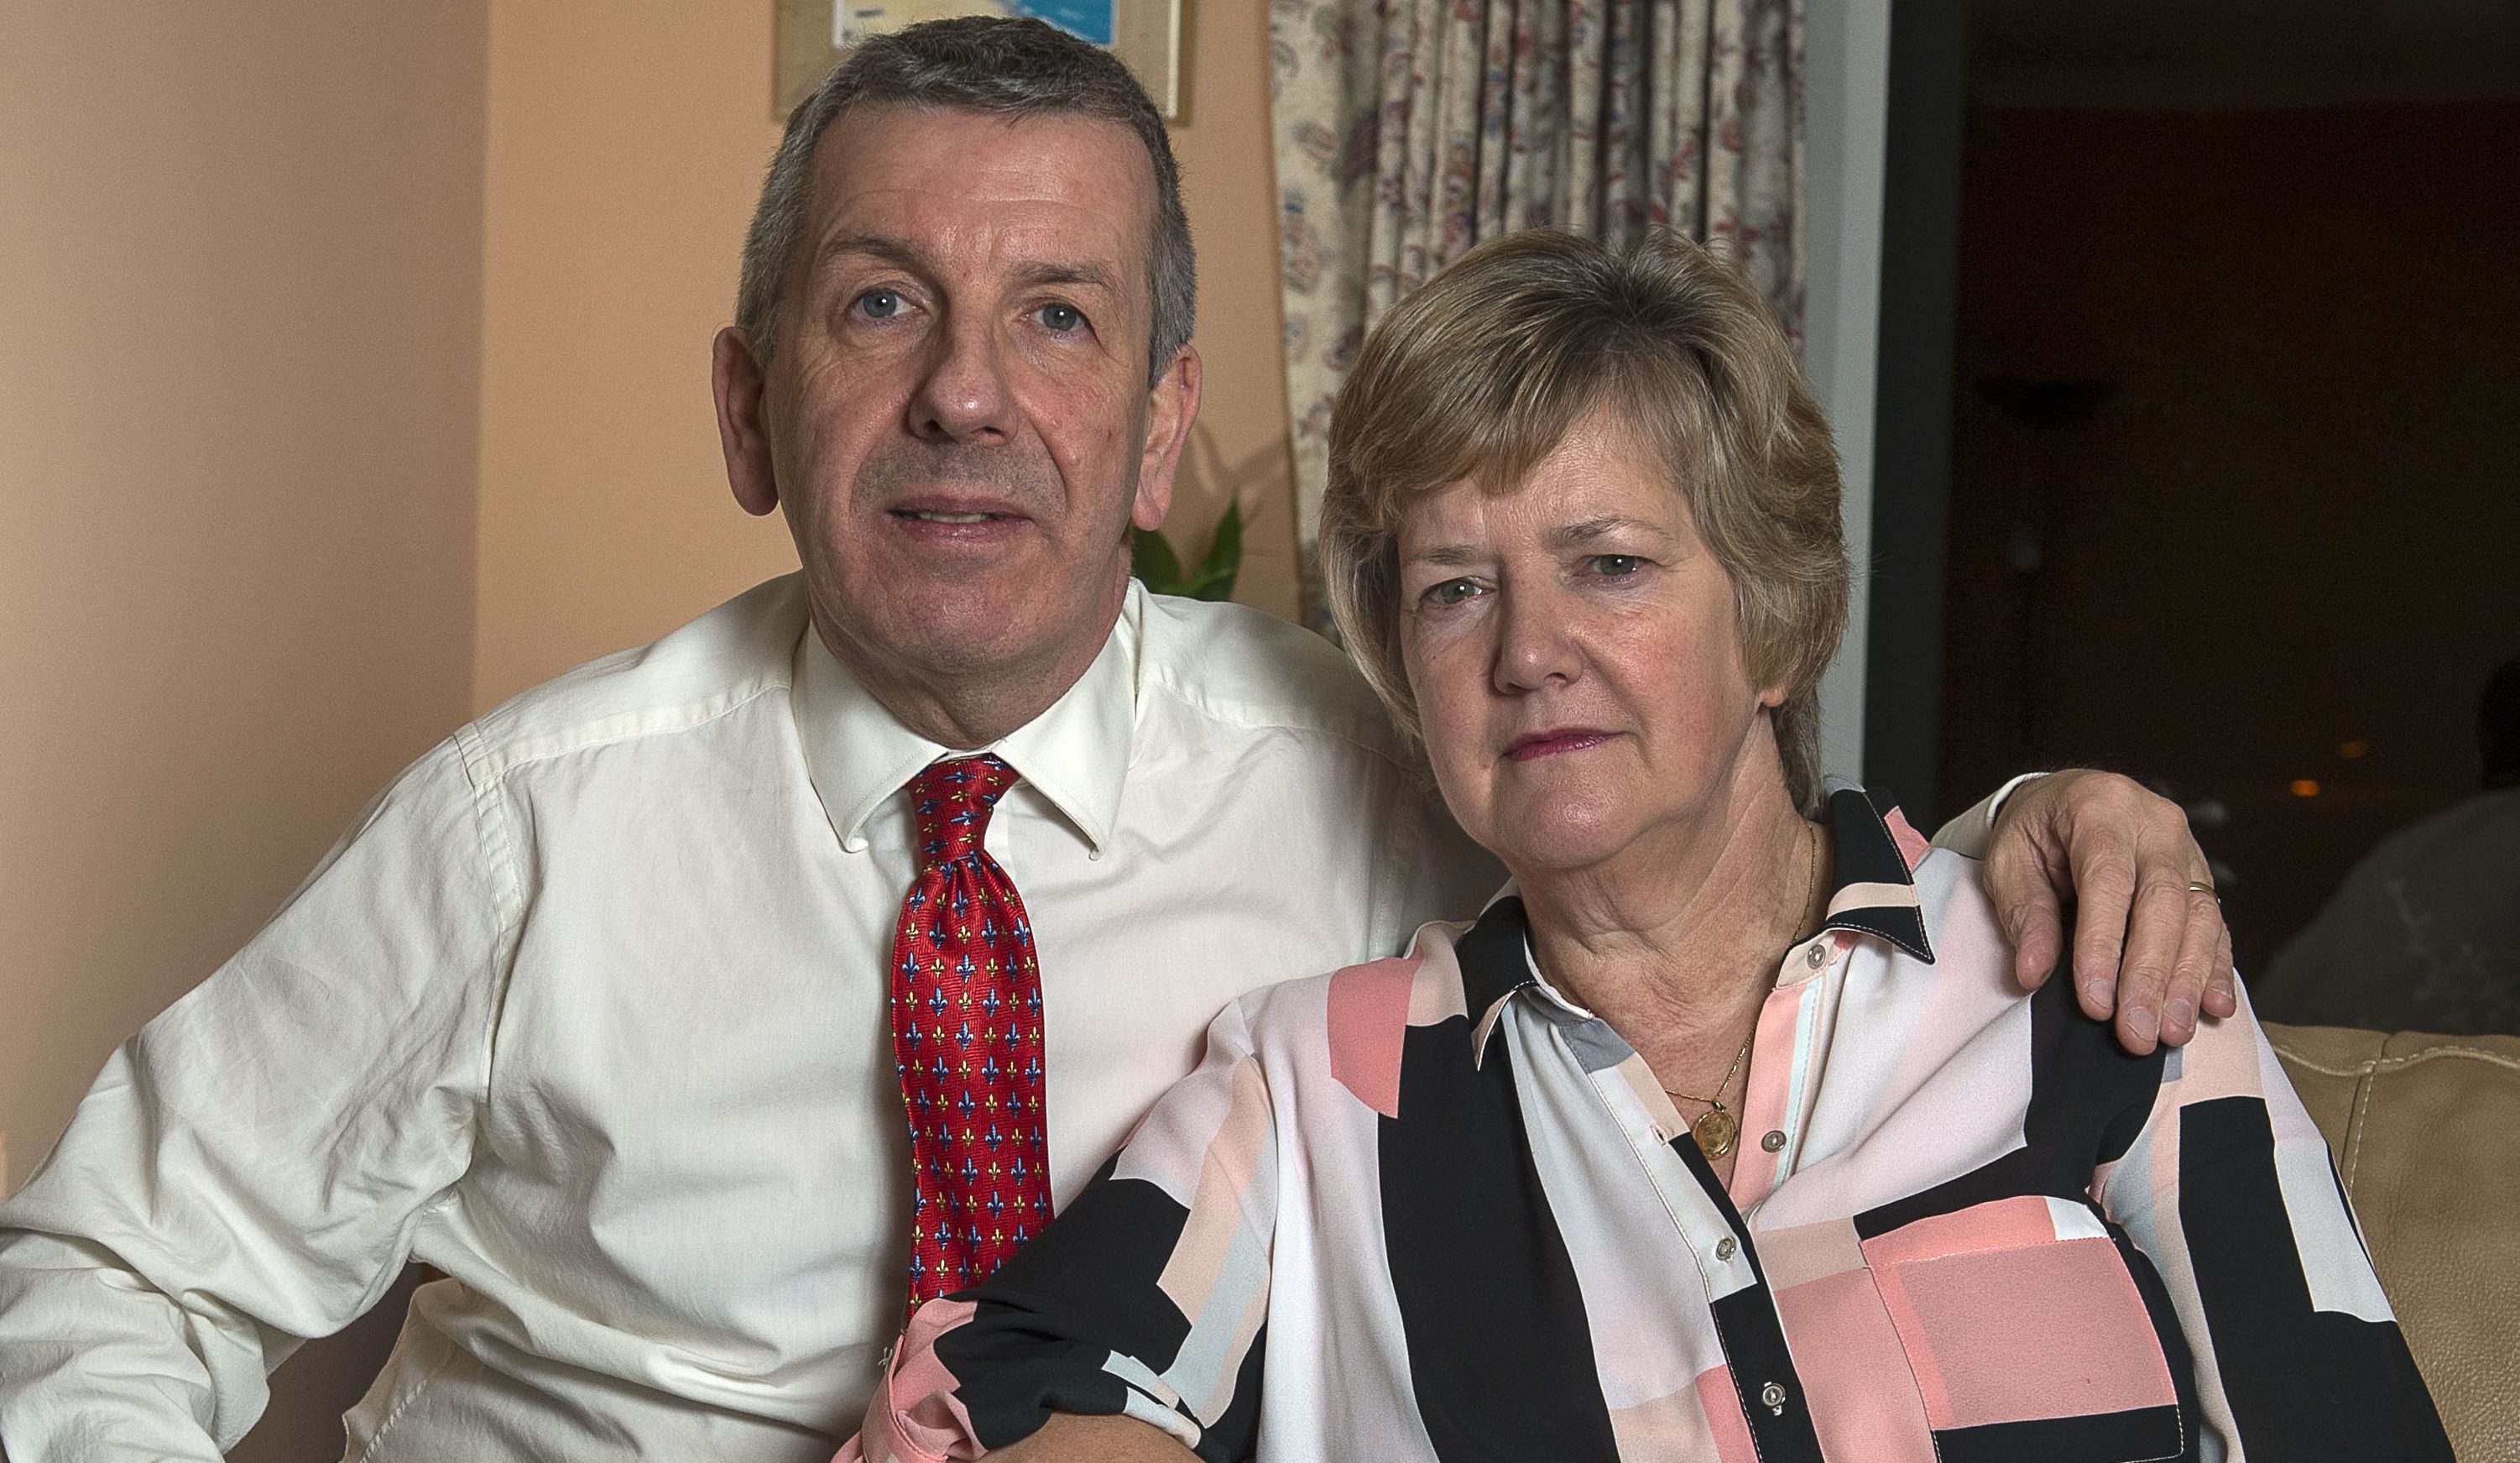 Inverness MSP David Stewart and wife Linda 

 

PIC...TREVOR MARTIN